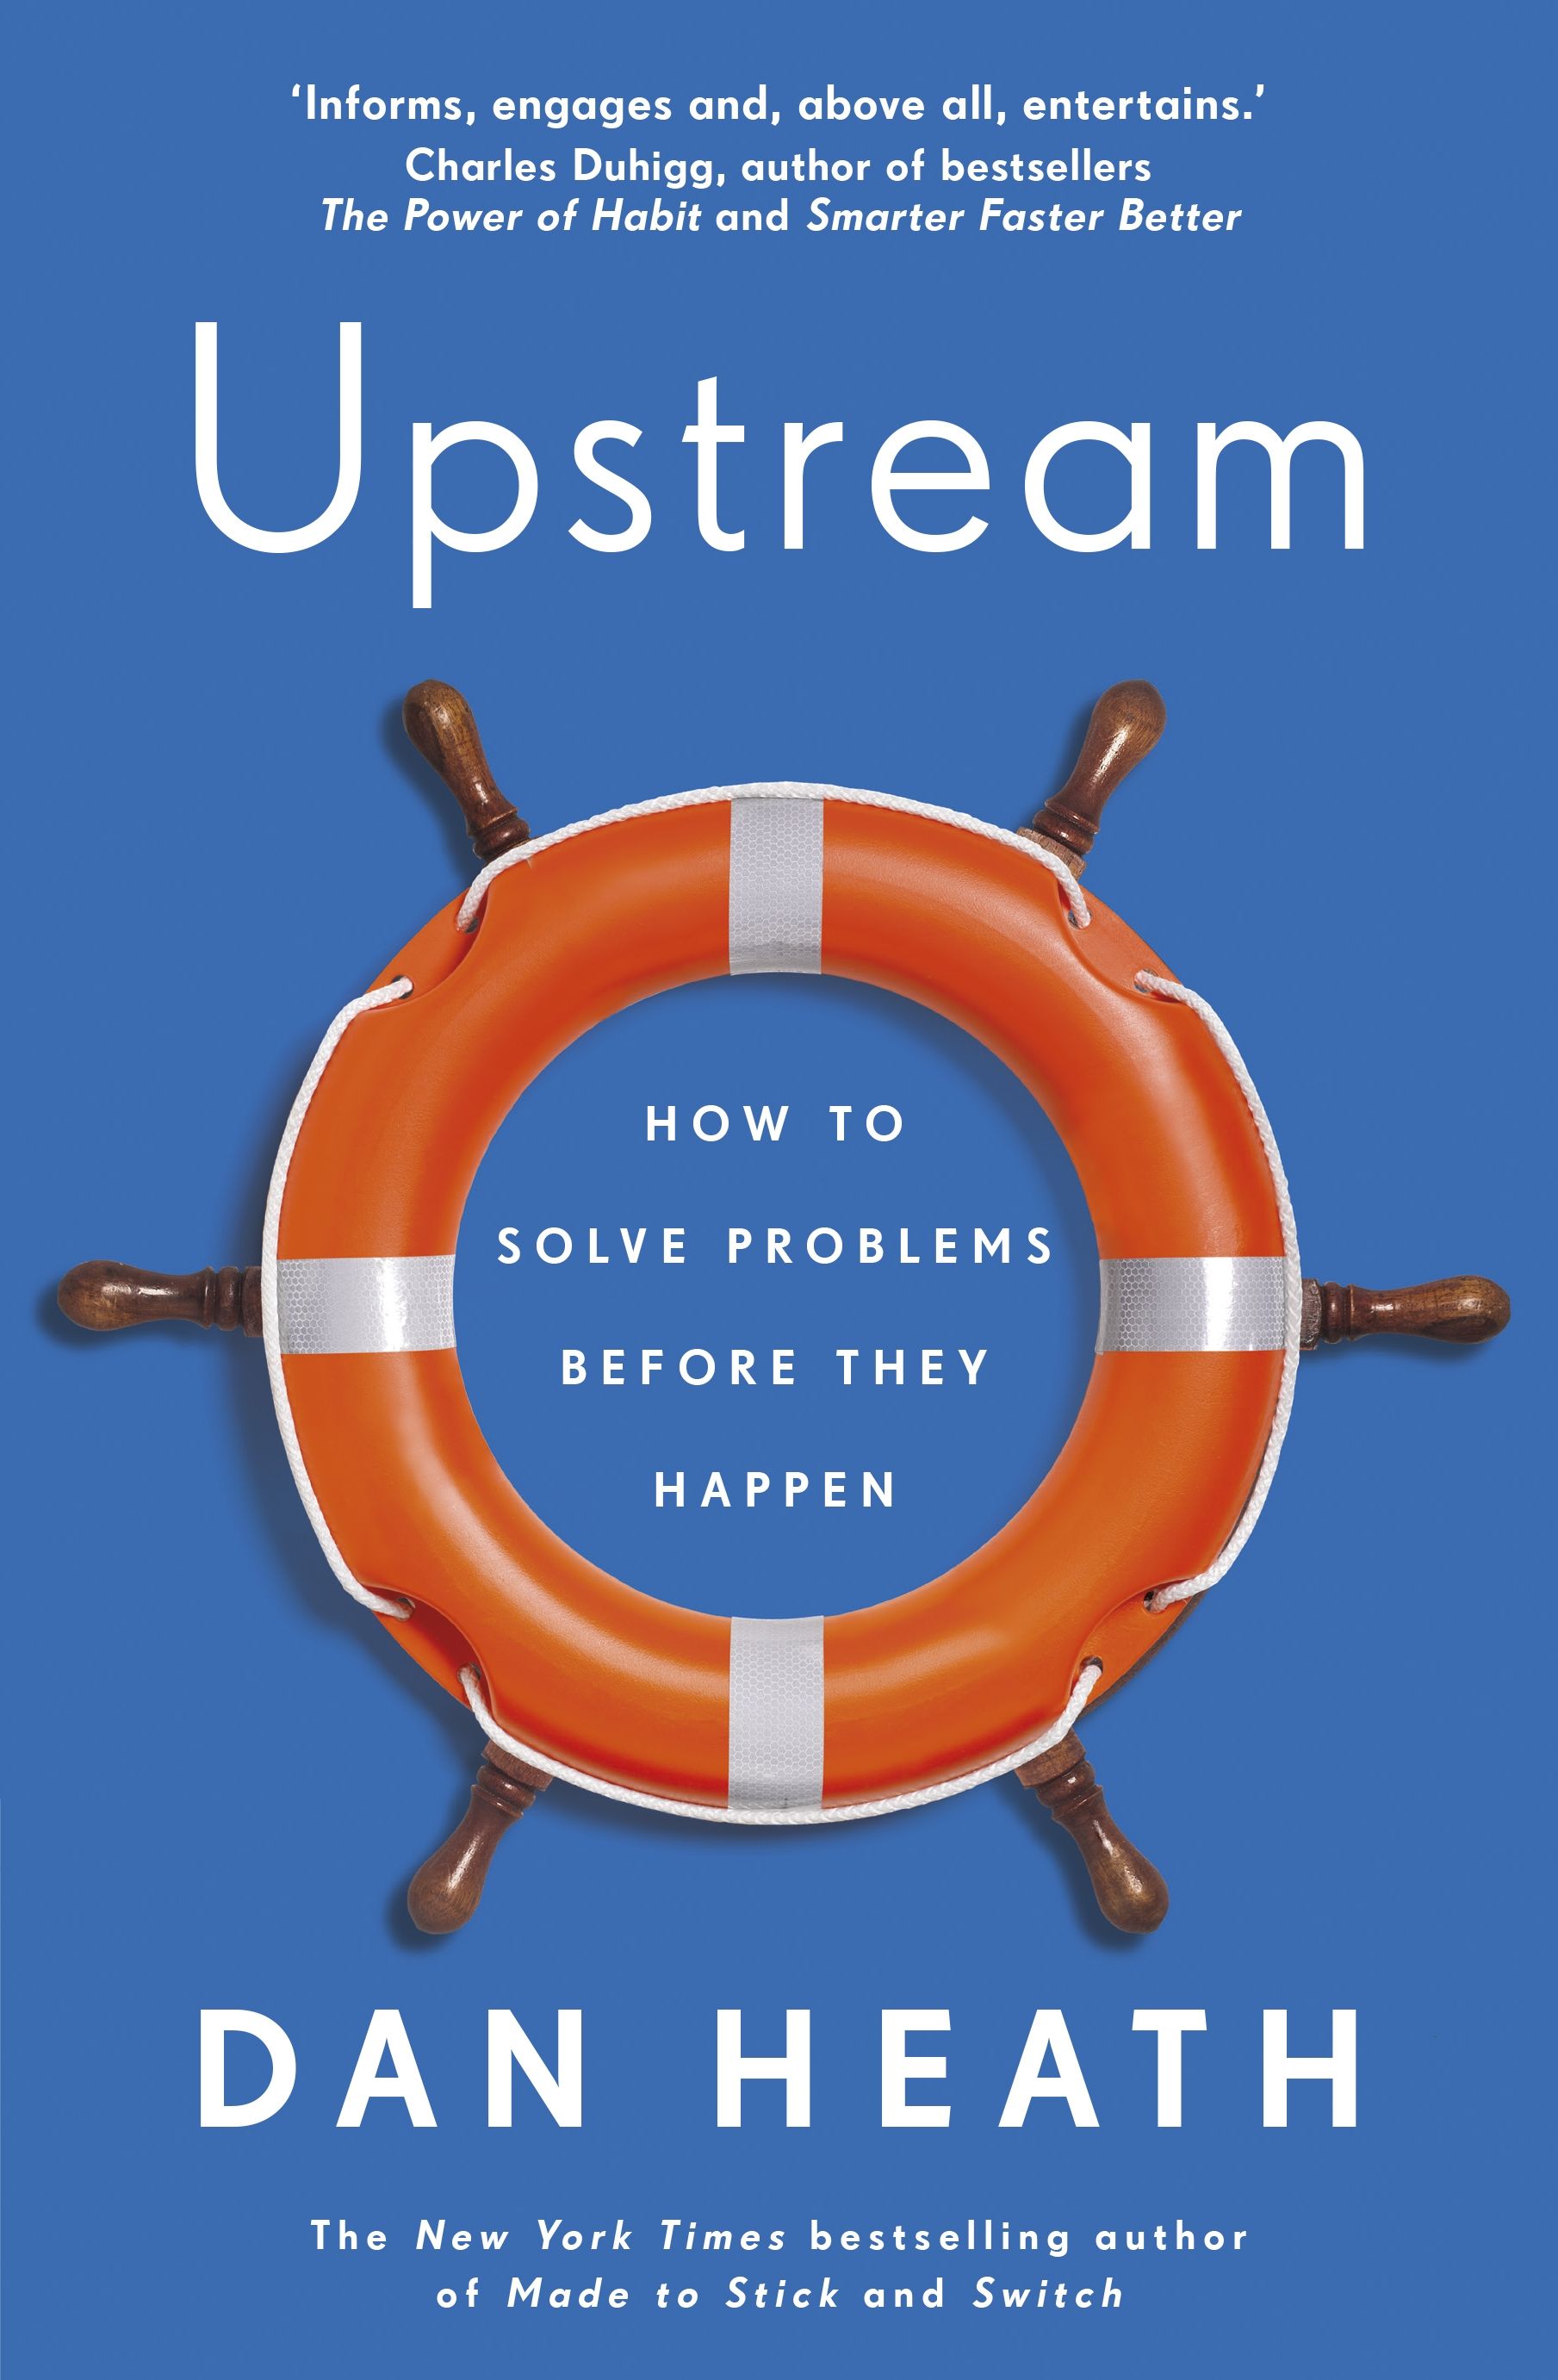 Upstream. Heath d. "upstream". Before problems. O happens